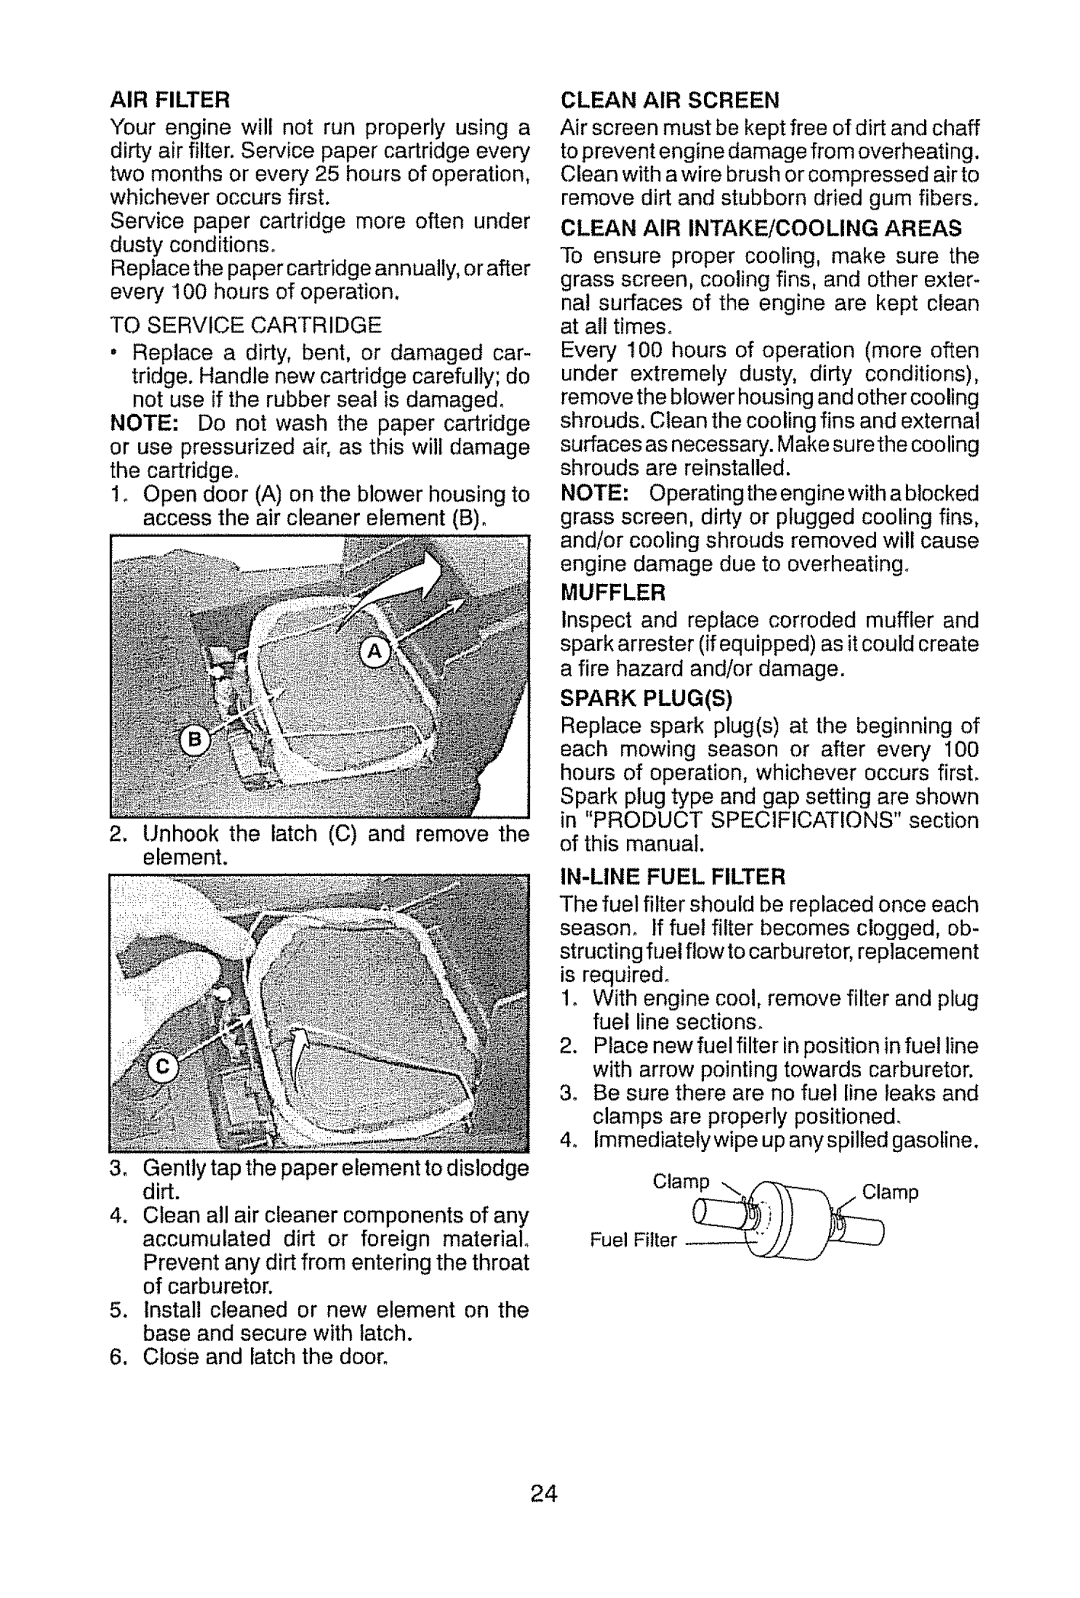 Craftsman 917.289470 manual Air Filter, Muffler, In-Linefuel Filter 